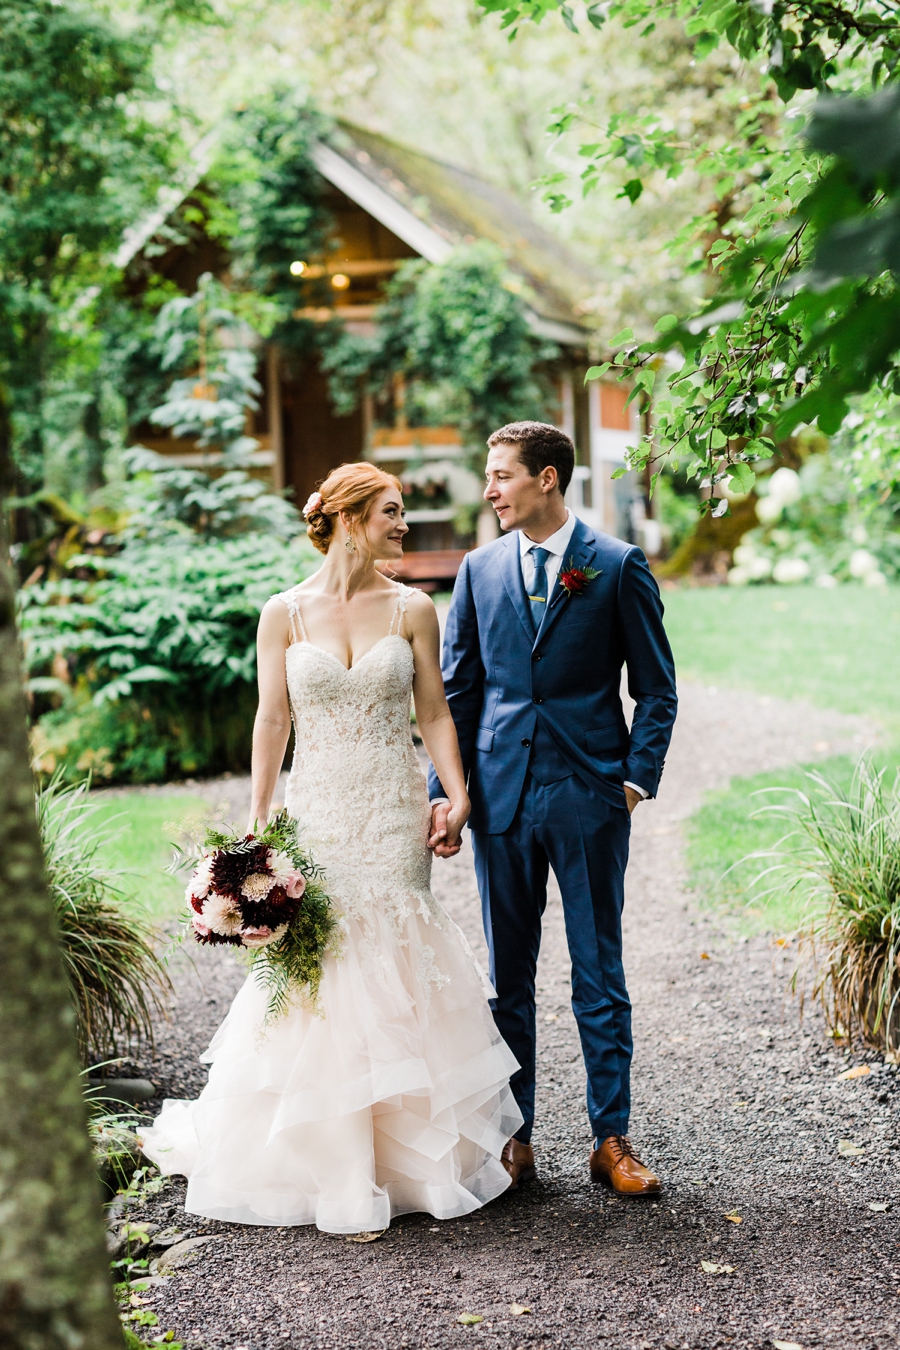 Maroni Meadows Wedding in Snohomish by Seattle wedding photographer Amy Galbraith